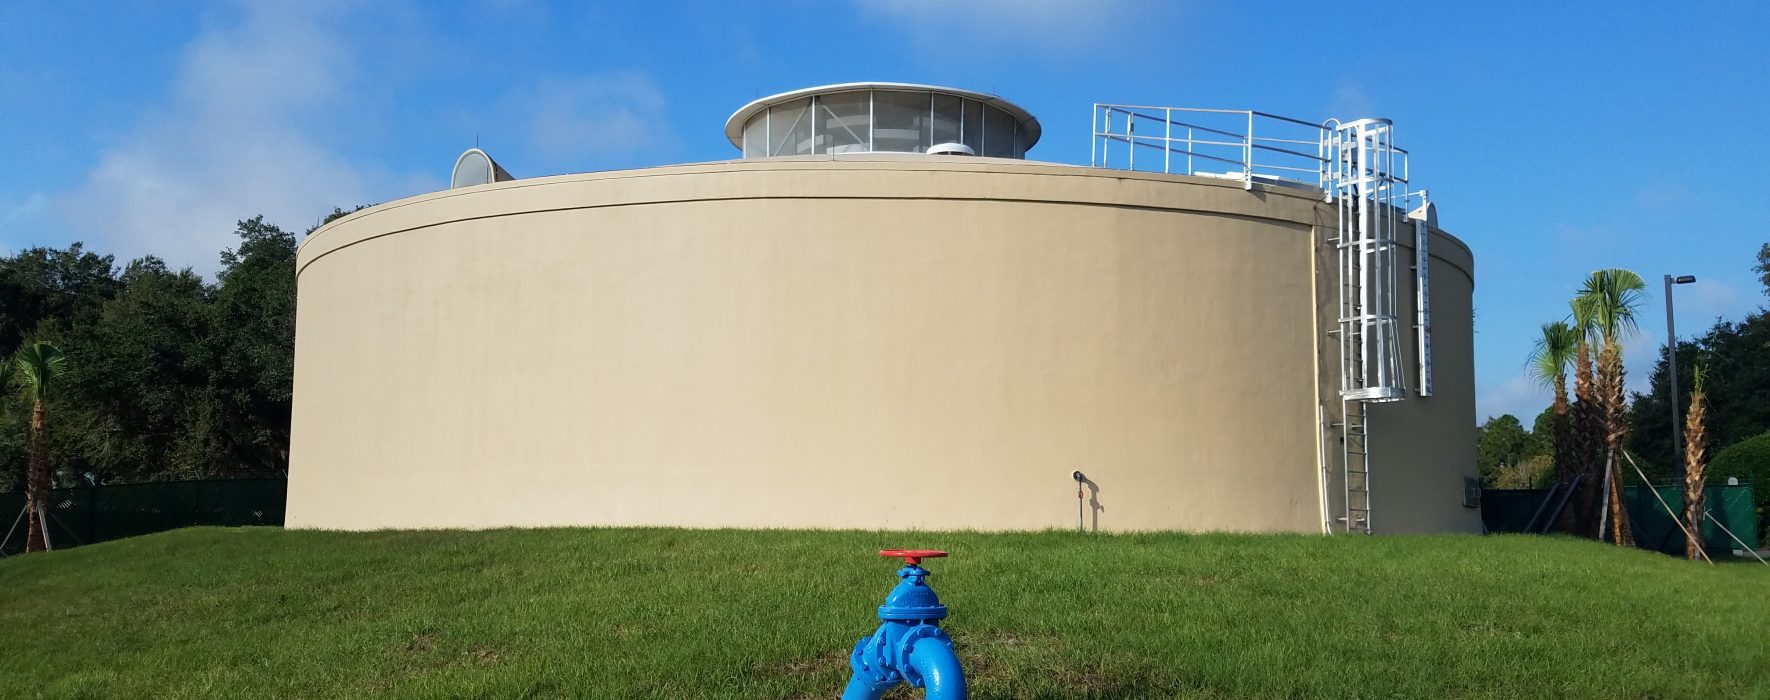 Plantation wastewater treatment plant exterior